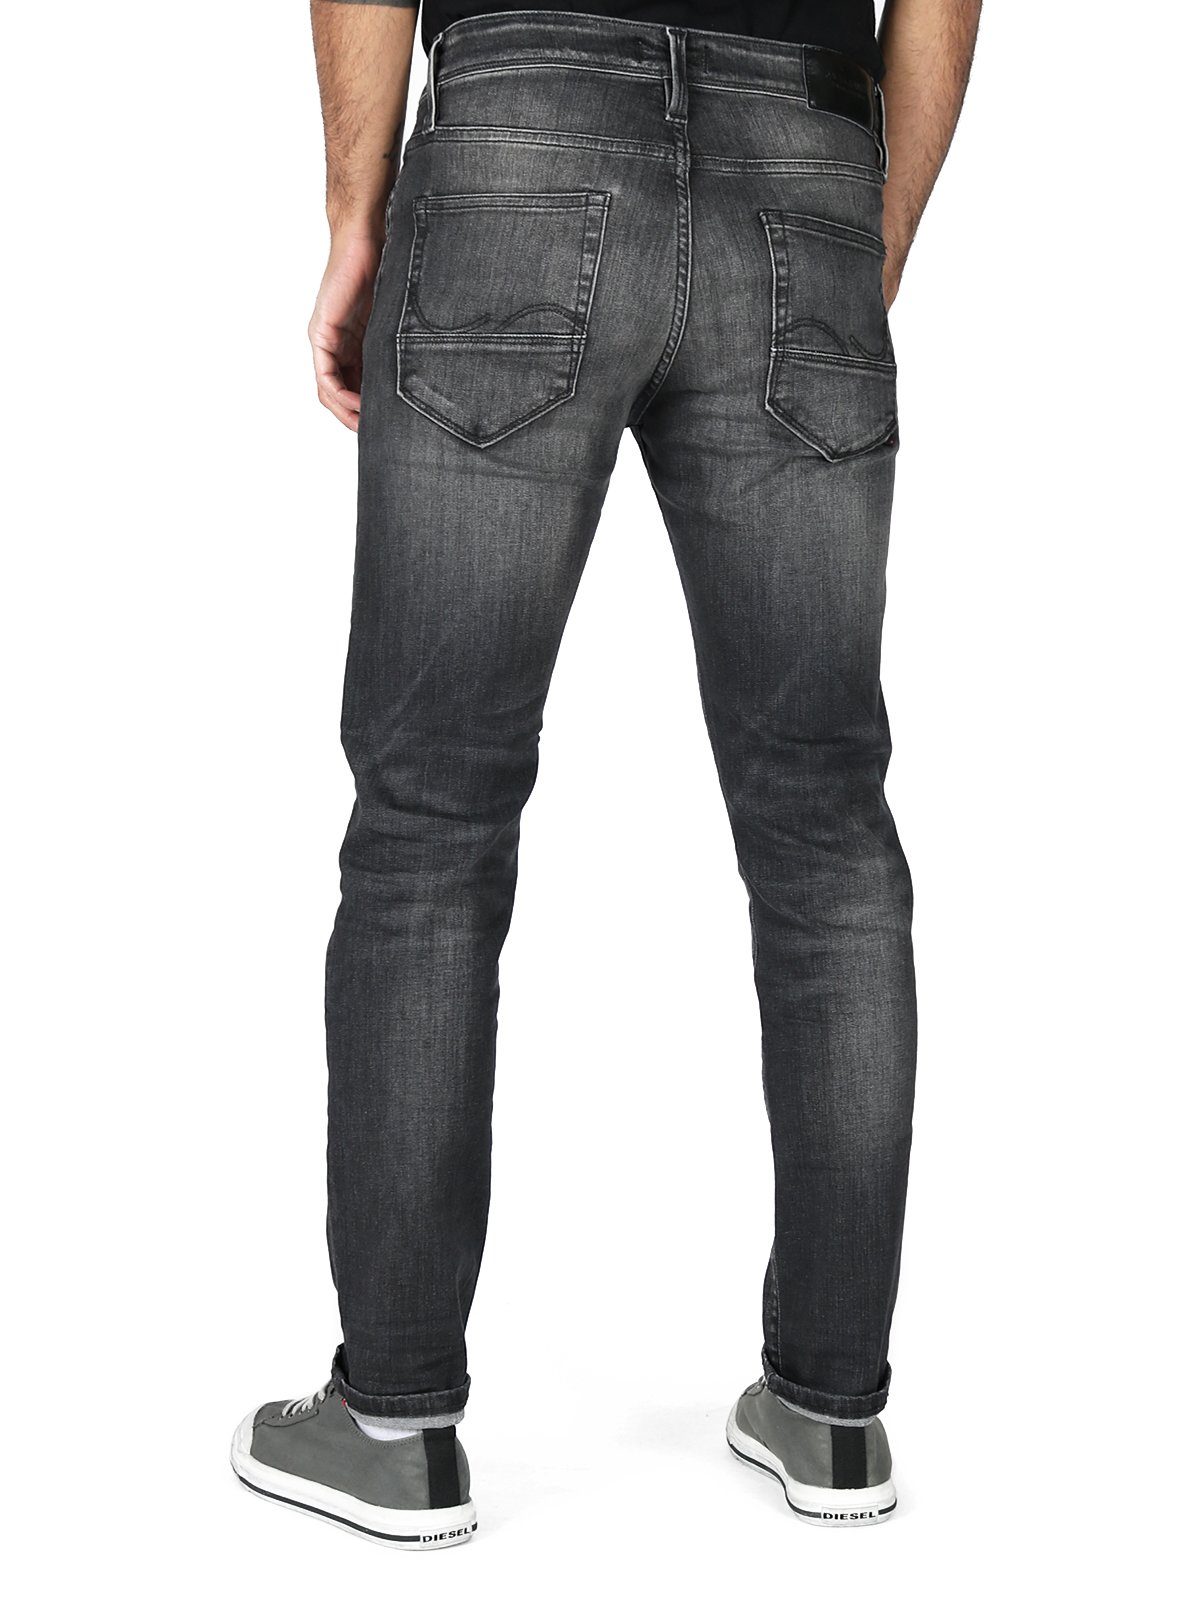 FOX - Rise - GLENN Jack - Jones Röhre Low Stretch & 655 BL Slim-fit-Jeans